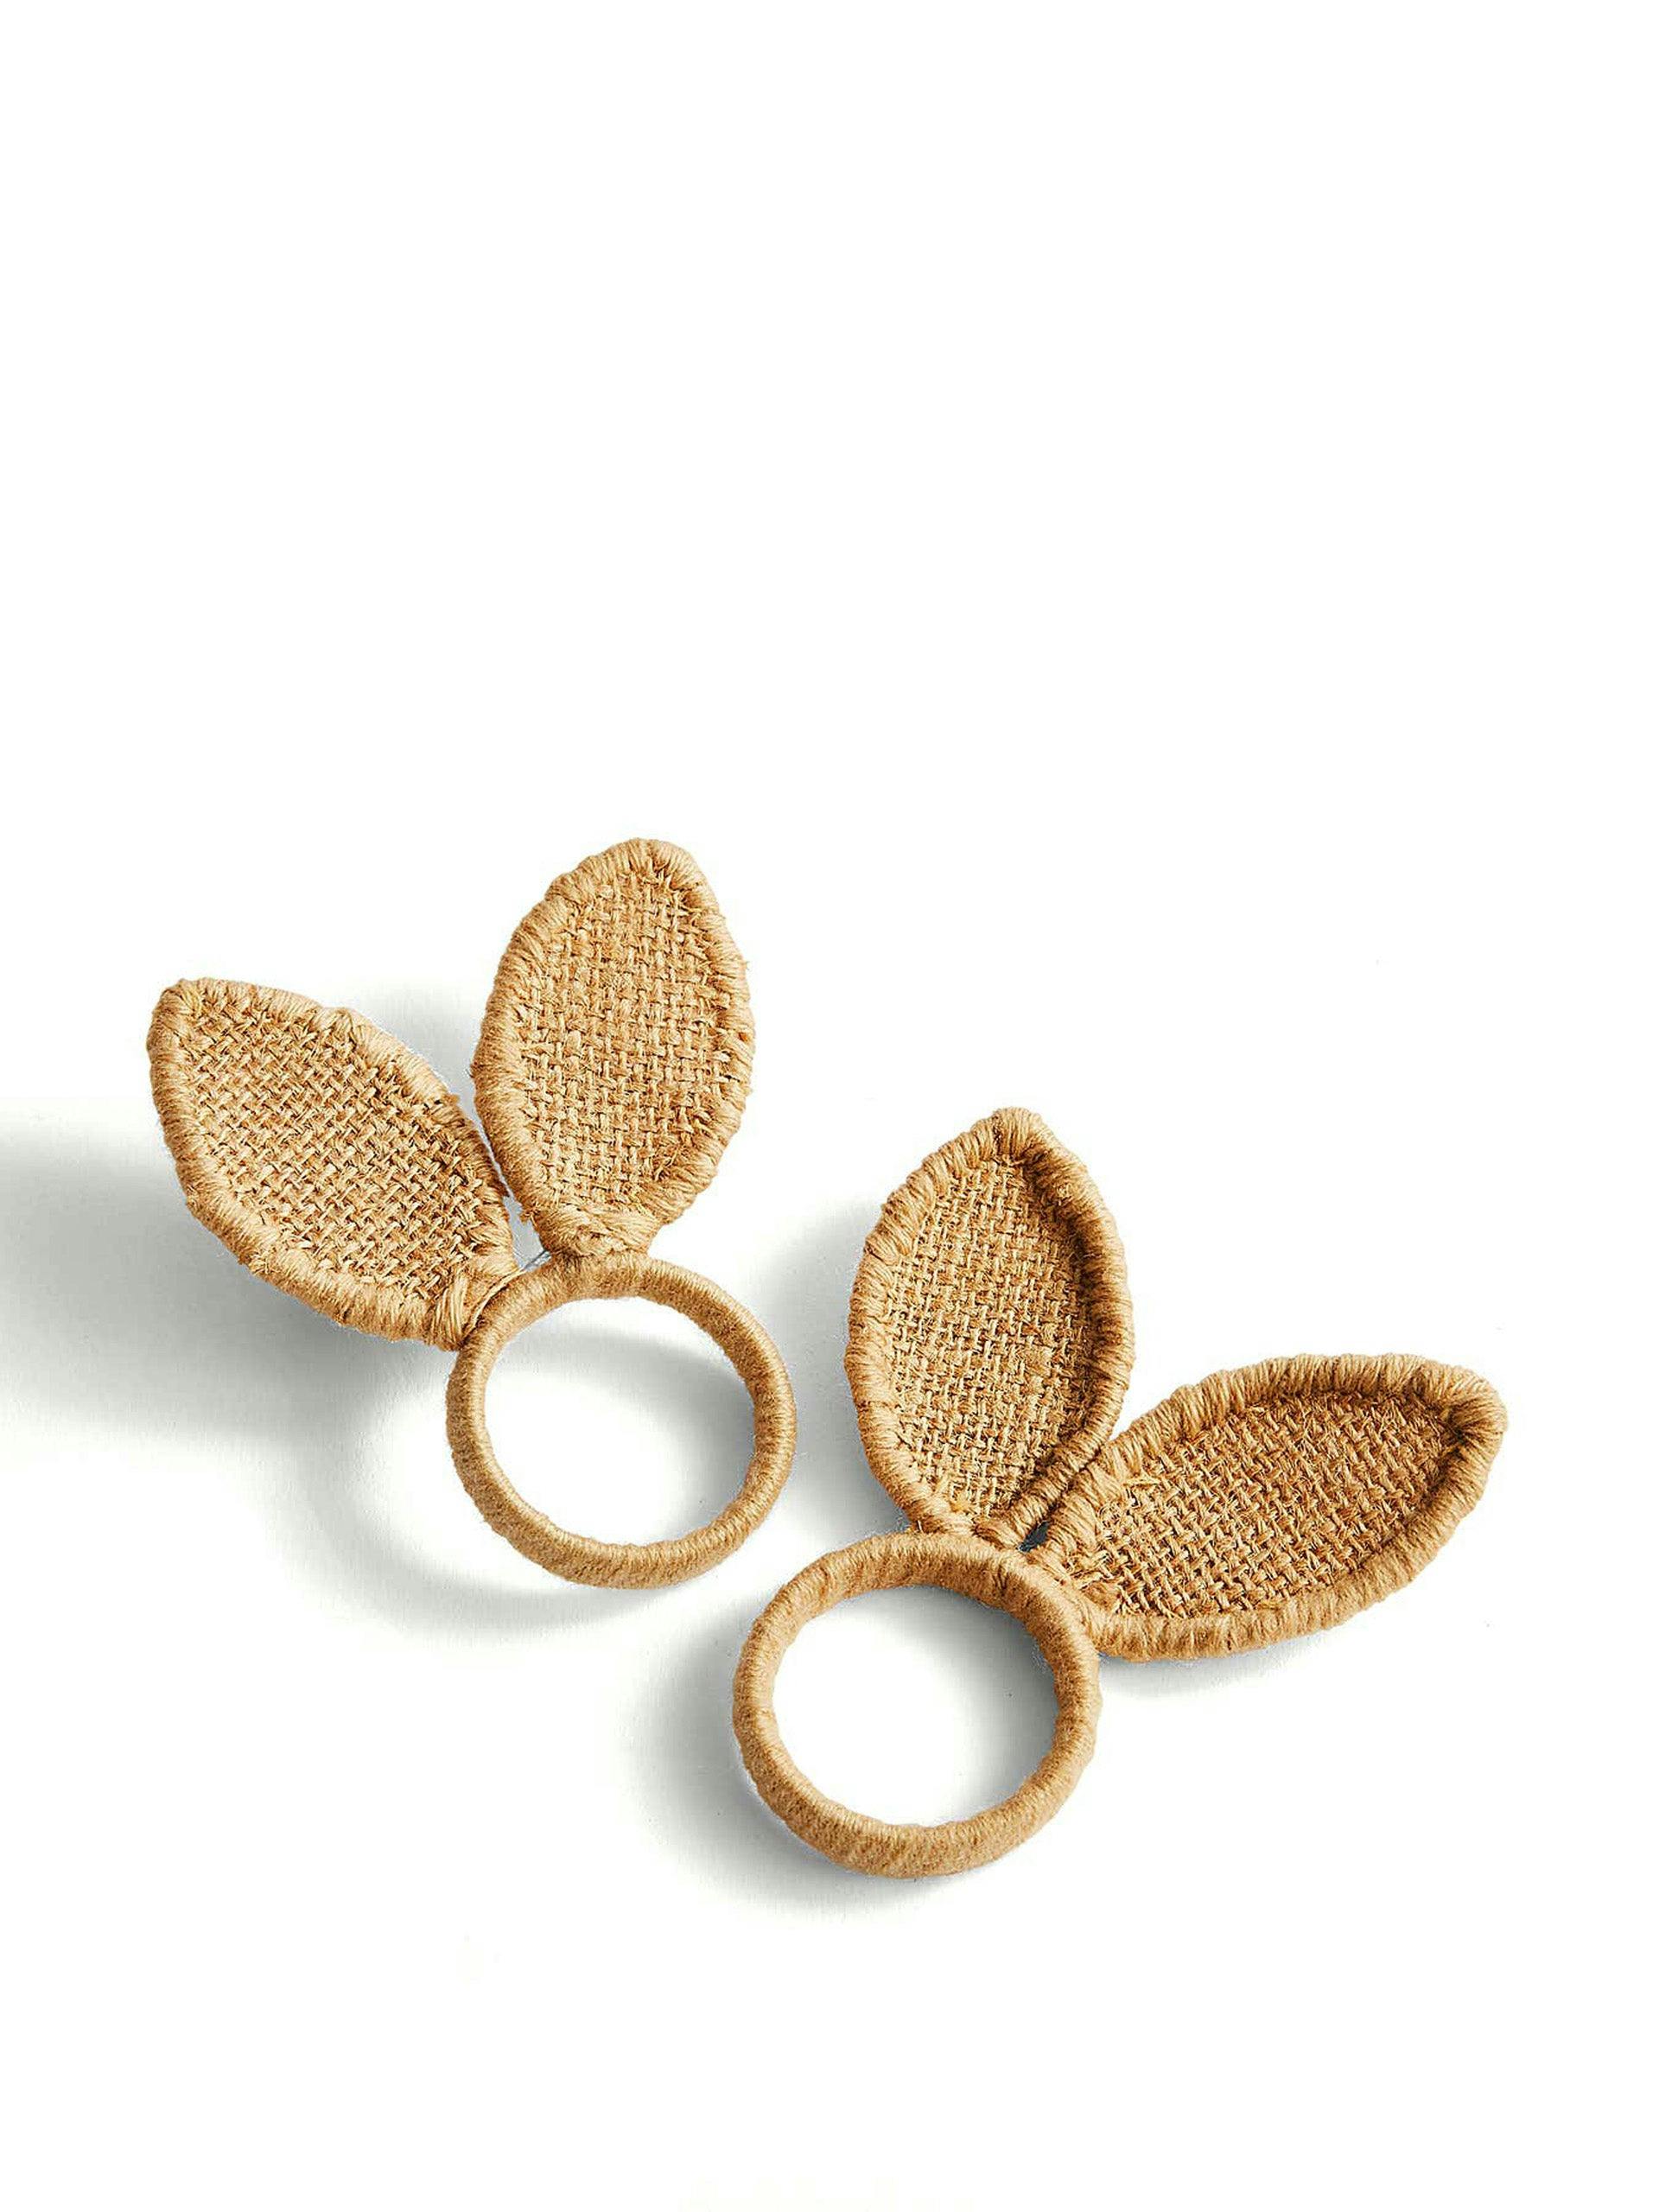 Woven bunny napkin rings (set of 2)